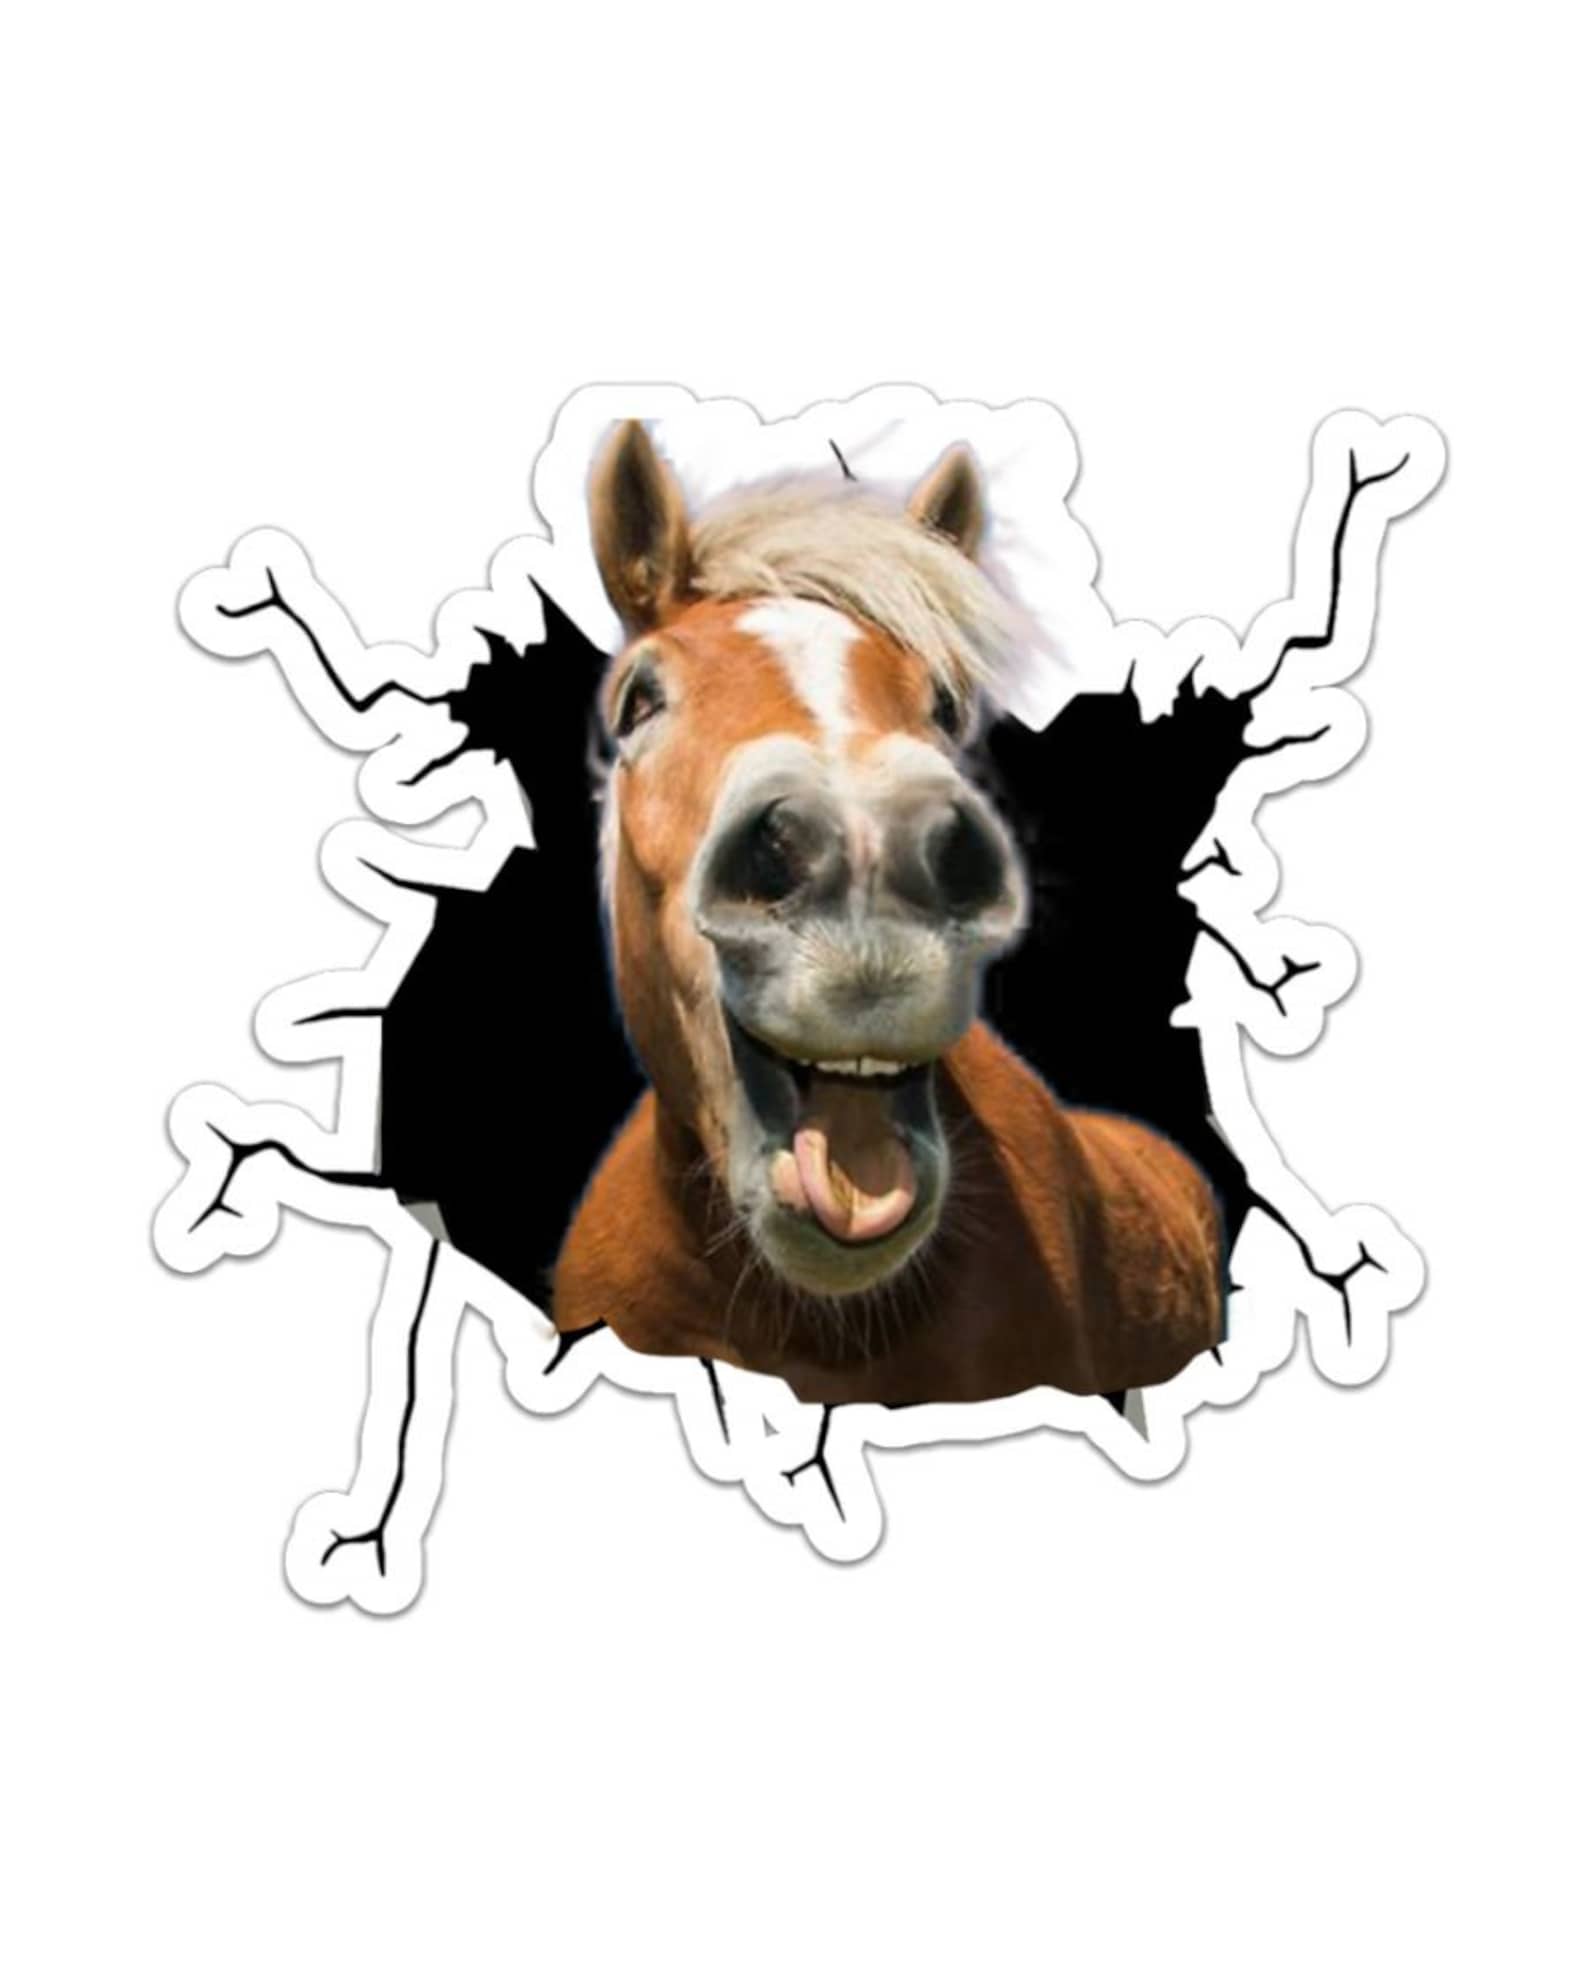 Horse Funny Sticker Laptop Decals Bumper Stickers Sticker | Etsy